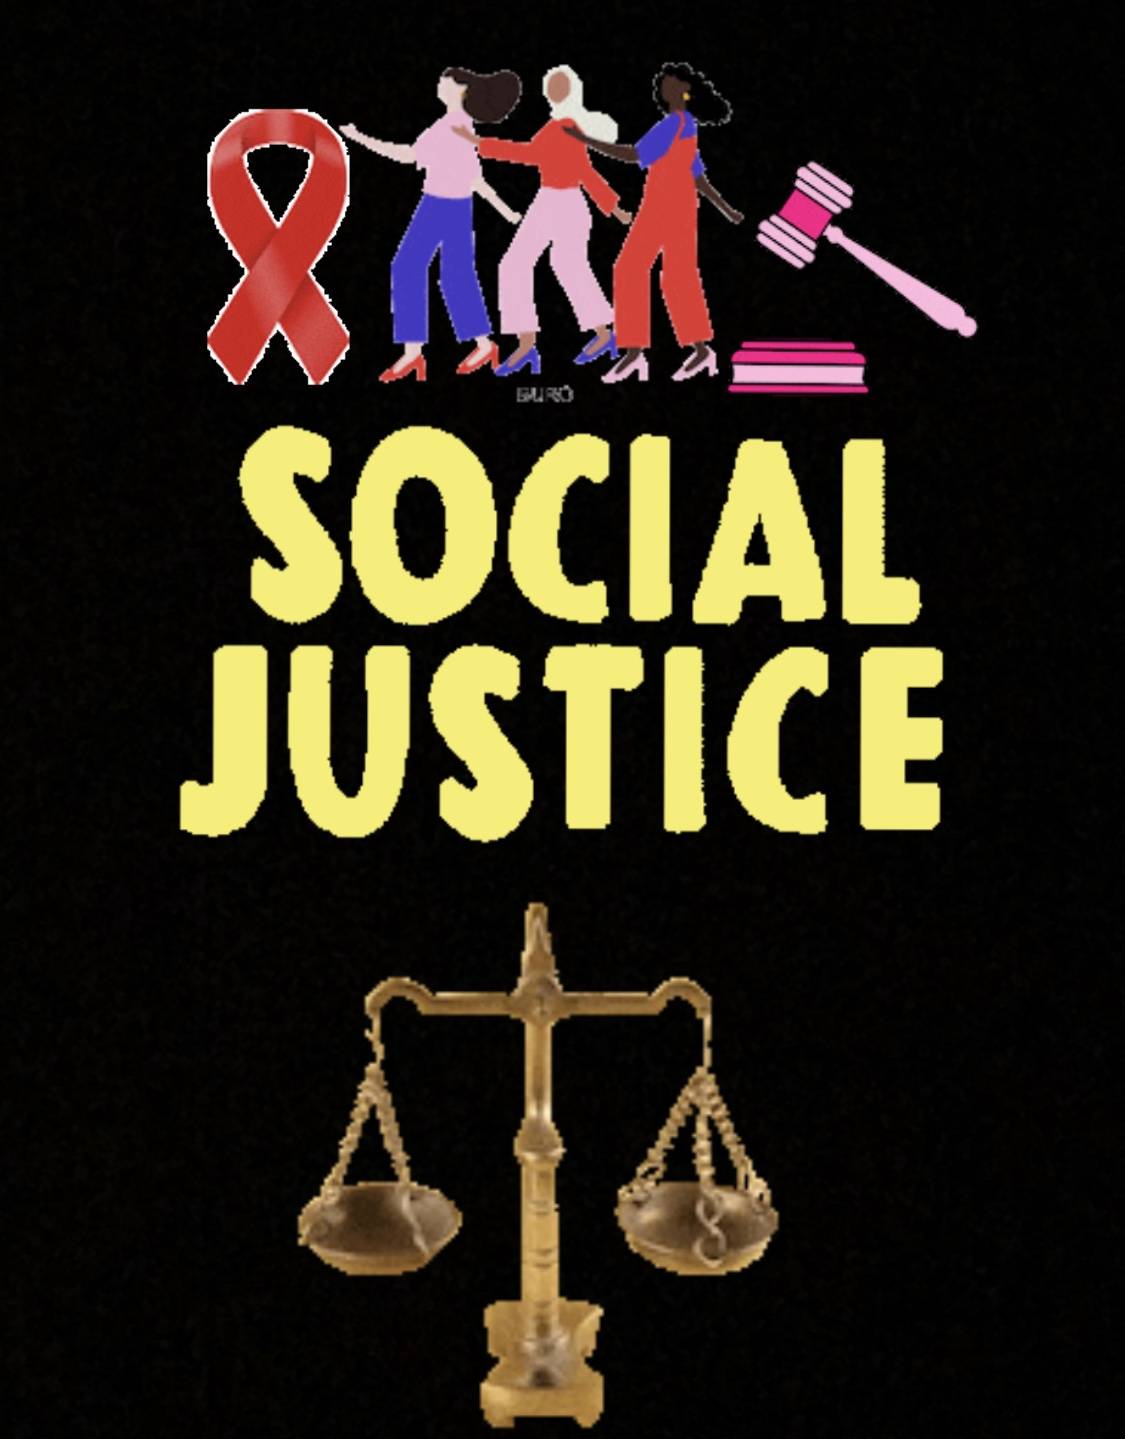 Social justice